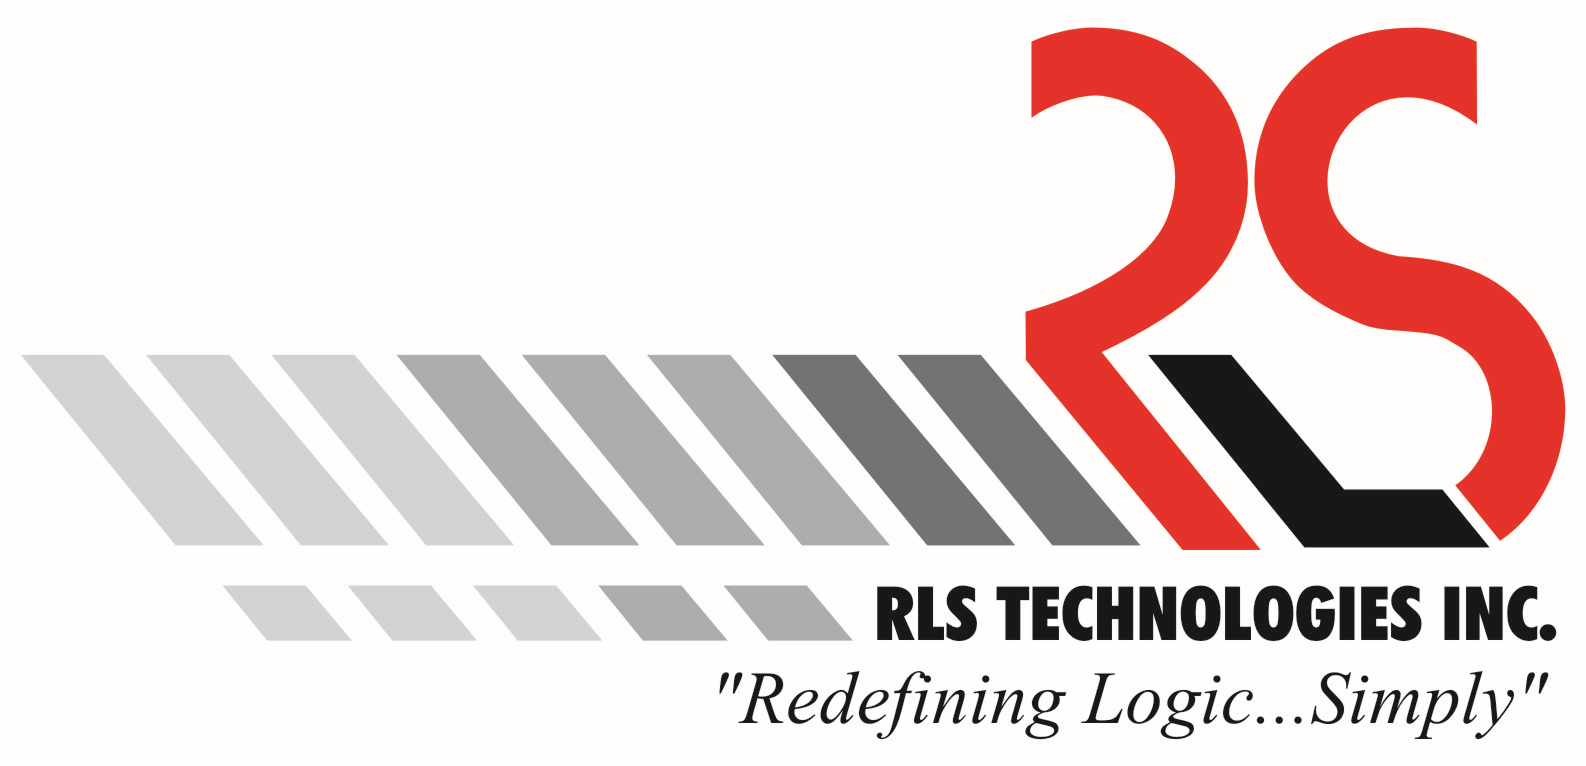 RLS Technologies Inc